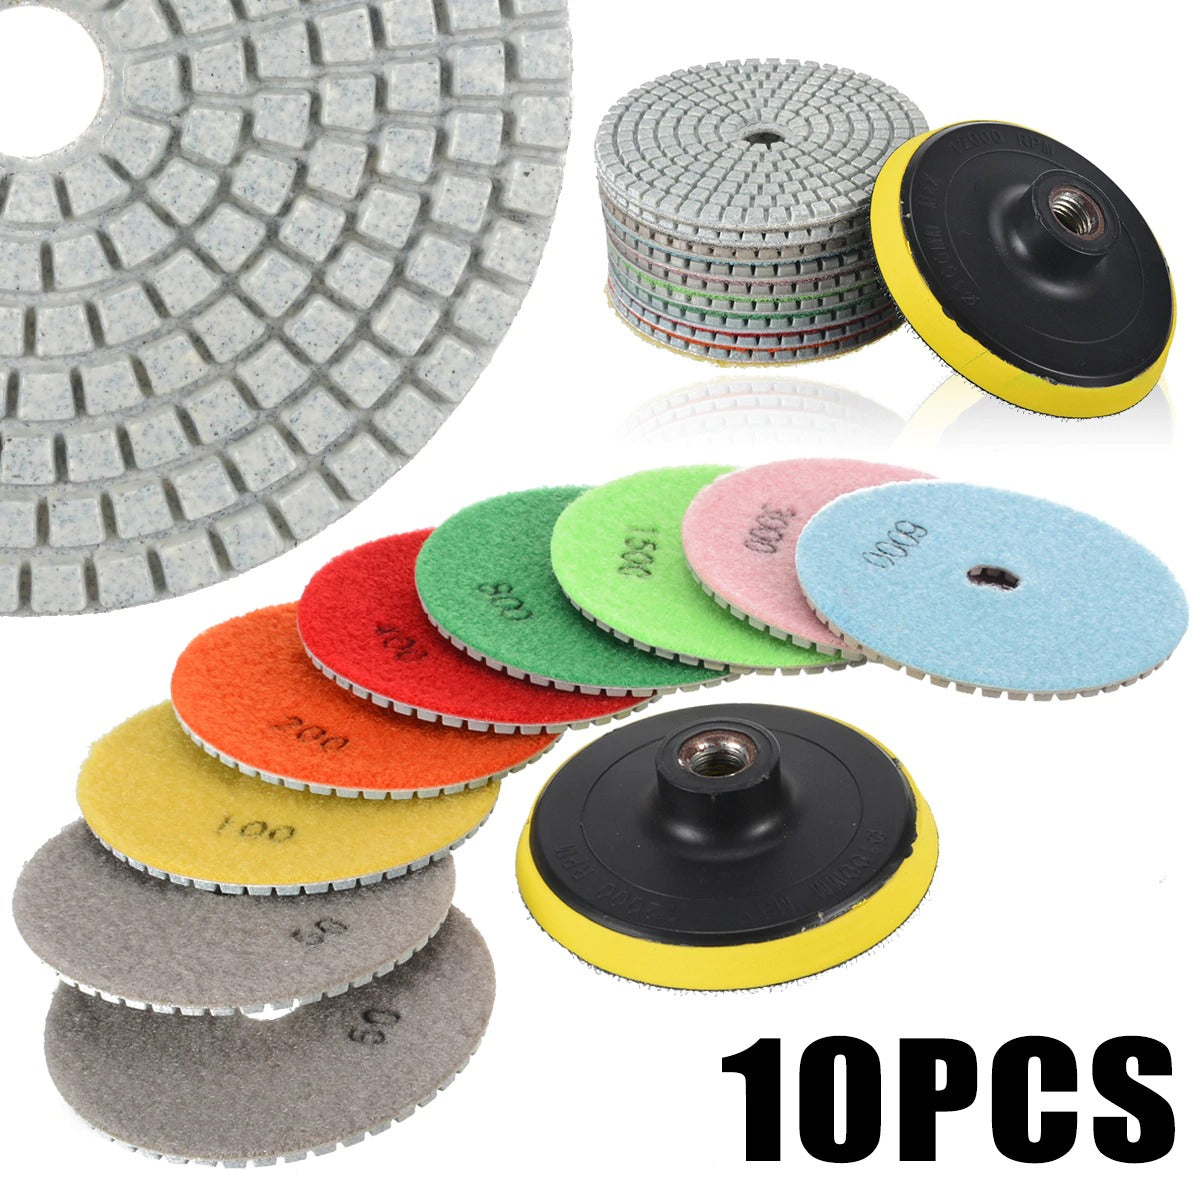 10Pcs Diamond Polishing Pads Kit 4 Inch M14 Polishing Wheel For Granite Stone Concrete Marble Polishing Tool Grinding Discs Set